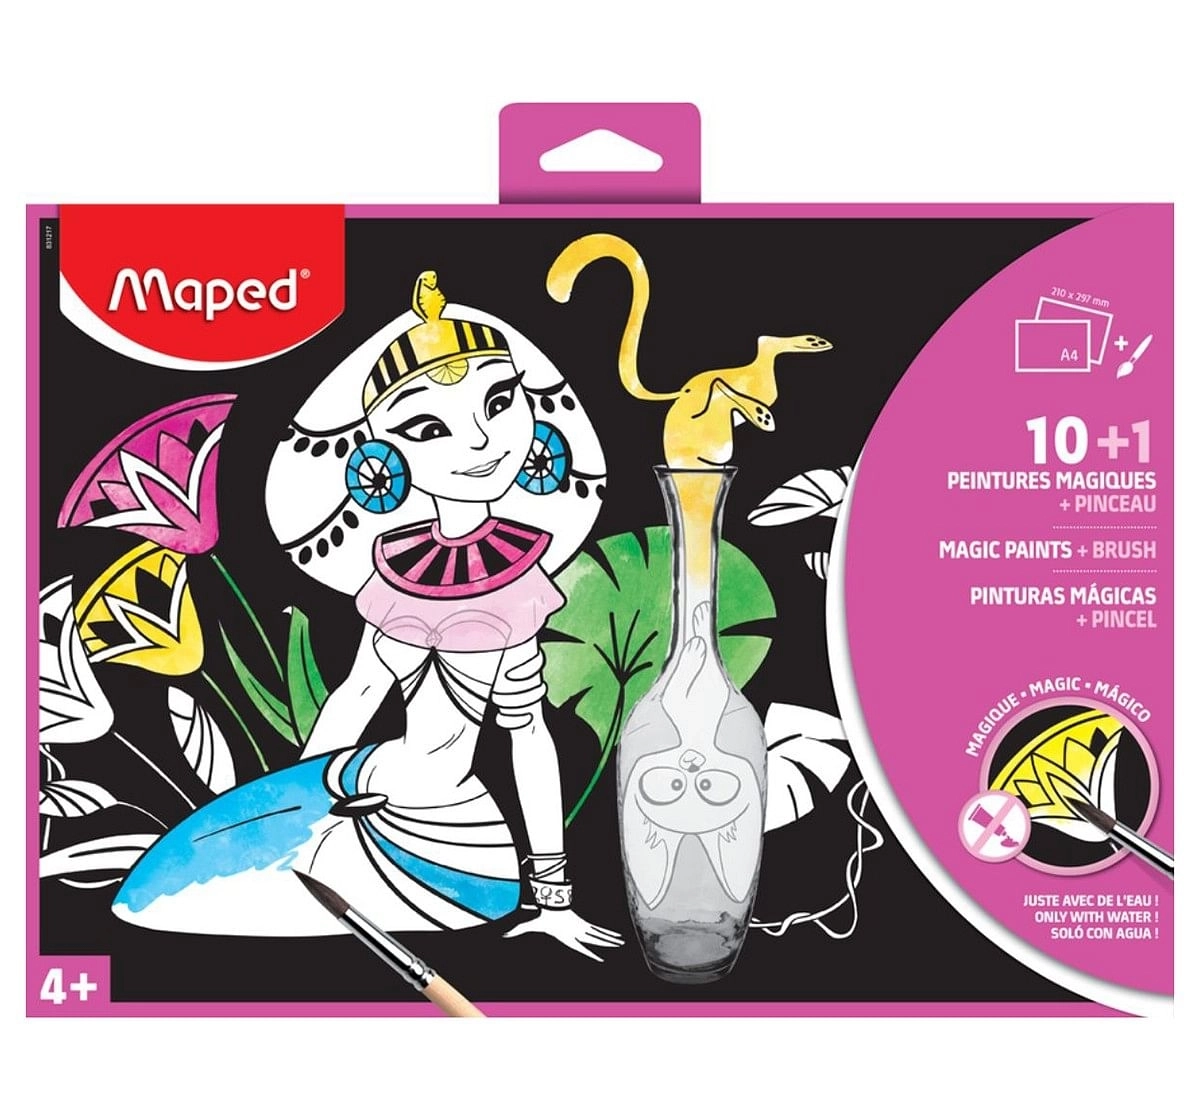 MAPED Creativ Wonder Kit for Kids, Smart Stationery kit